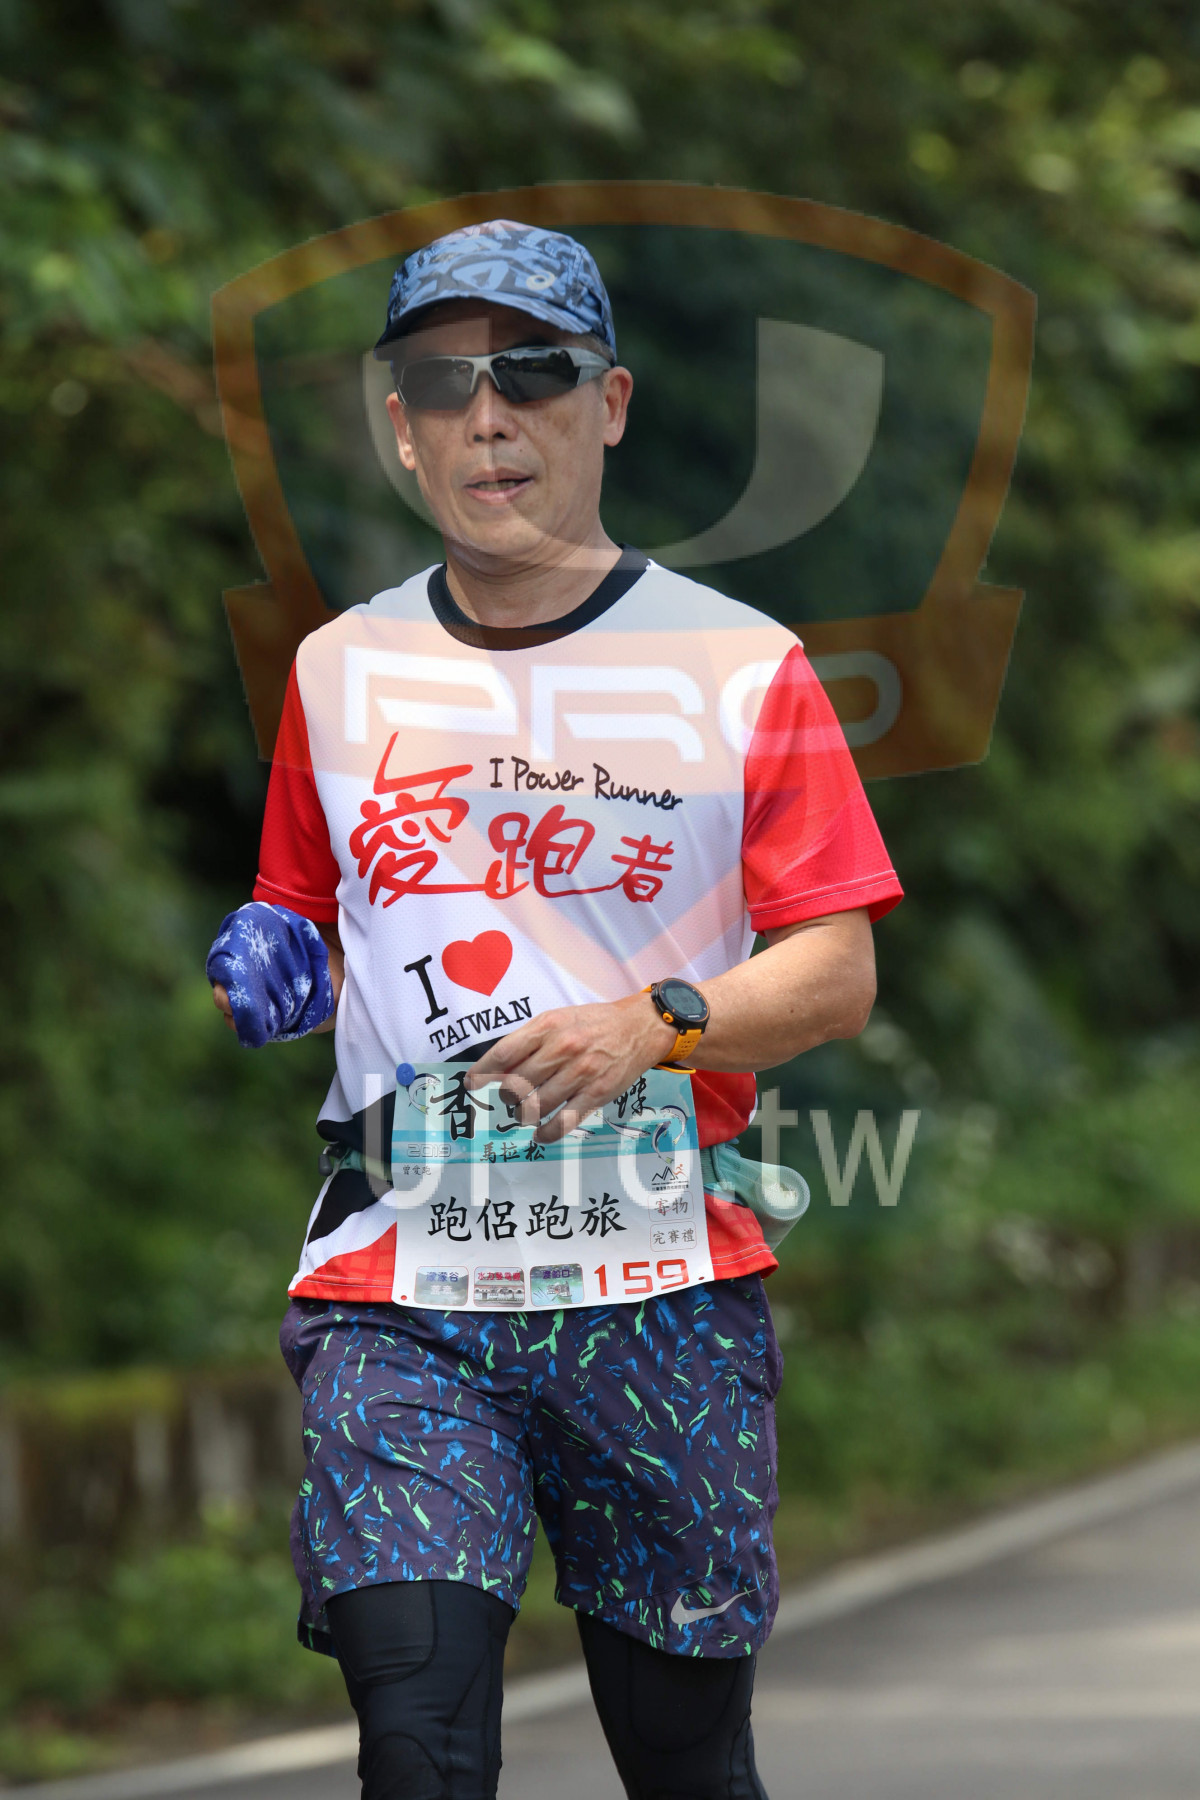 IPouer Runner,TAIWAN,,。,,|